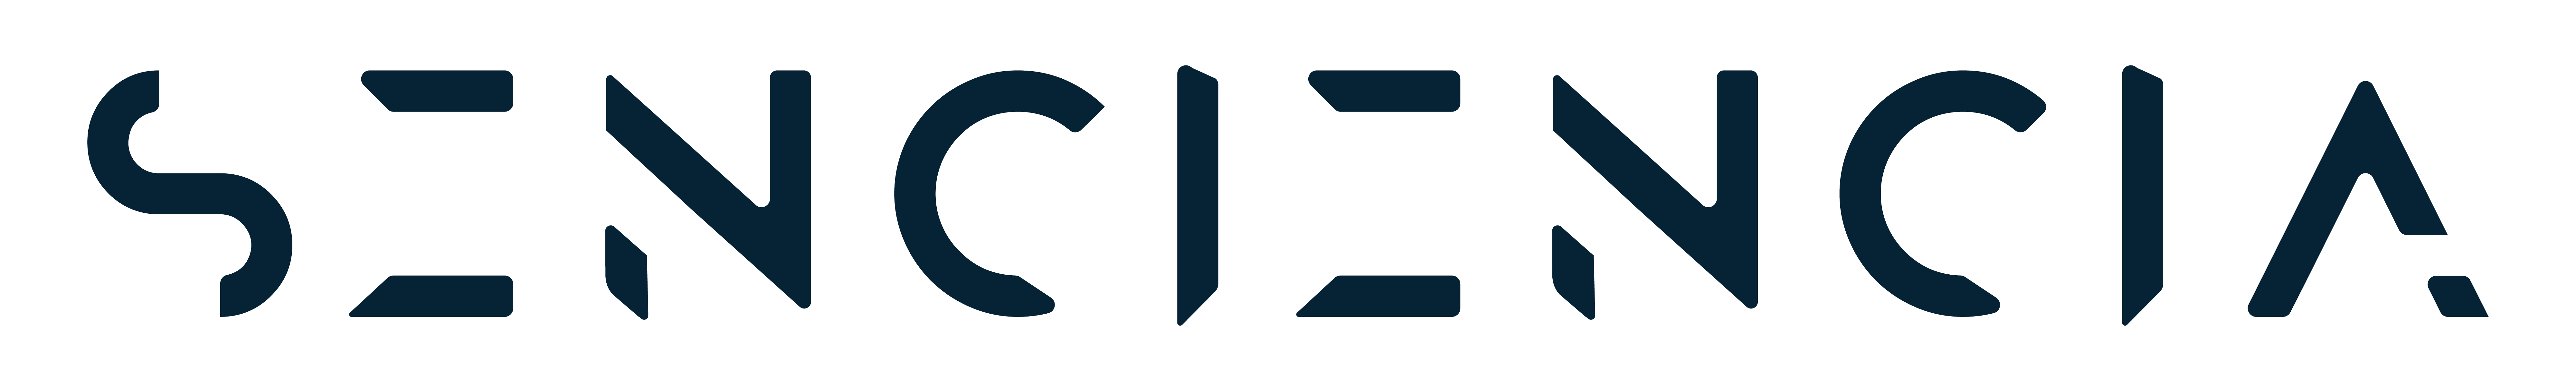 Senciencia blue text logo